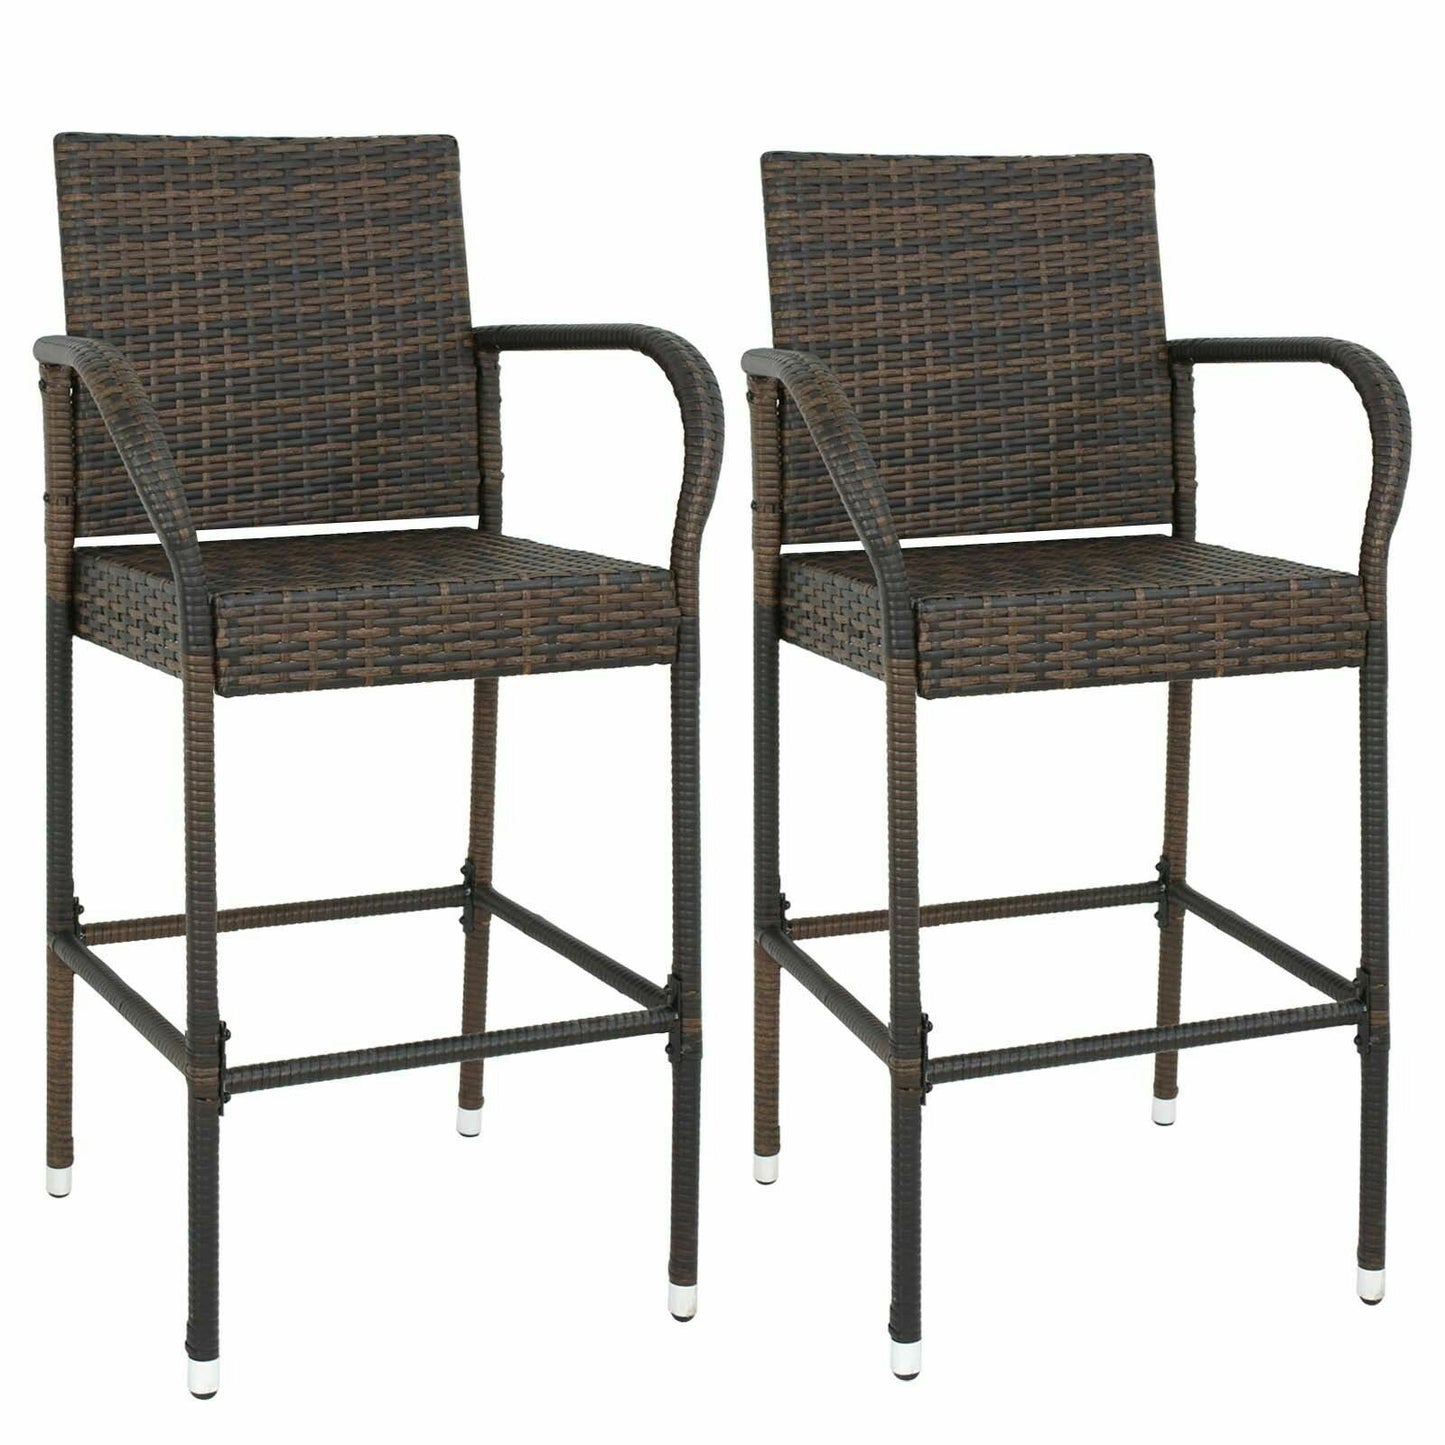 4 Pack Wicker Bar Stool Rattan Chair Patio Furniture Chair Outdoor Backyard